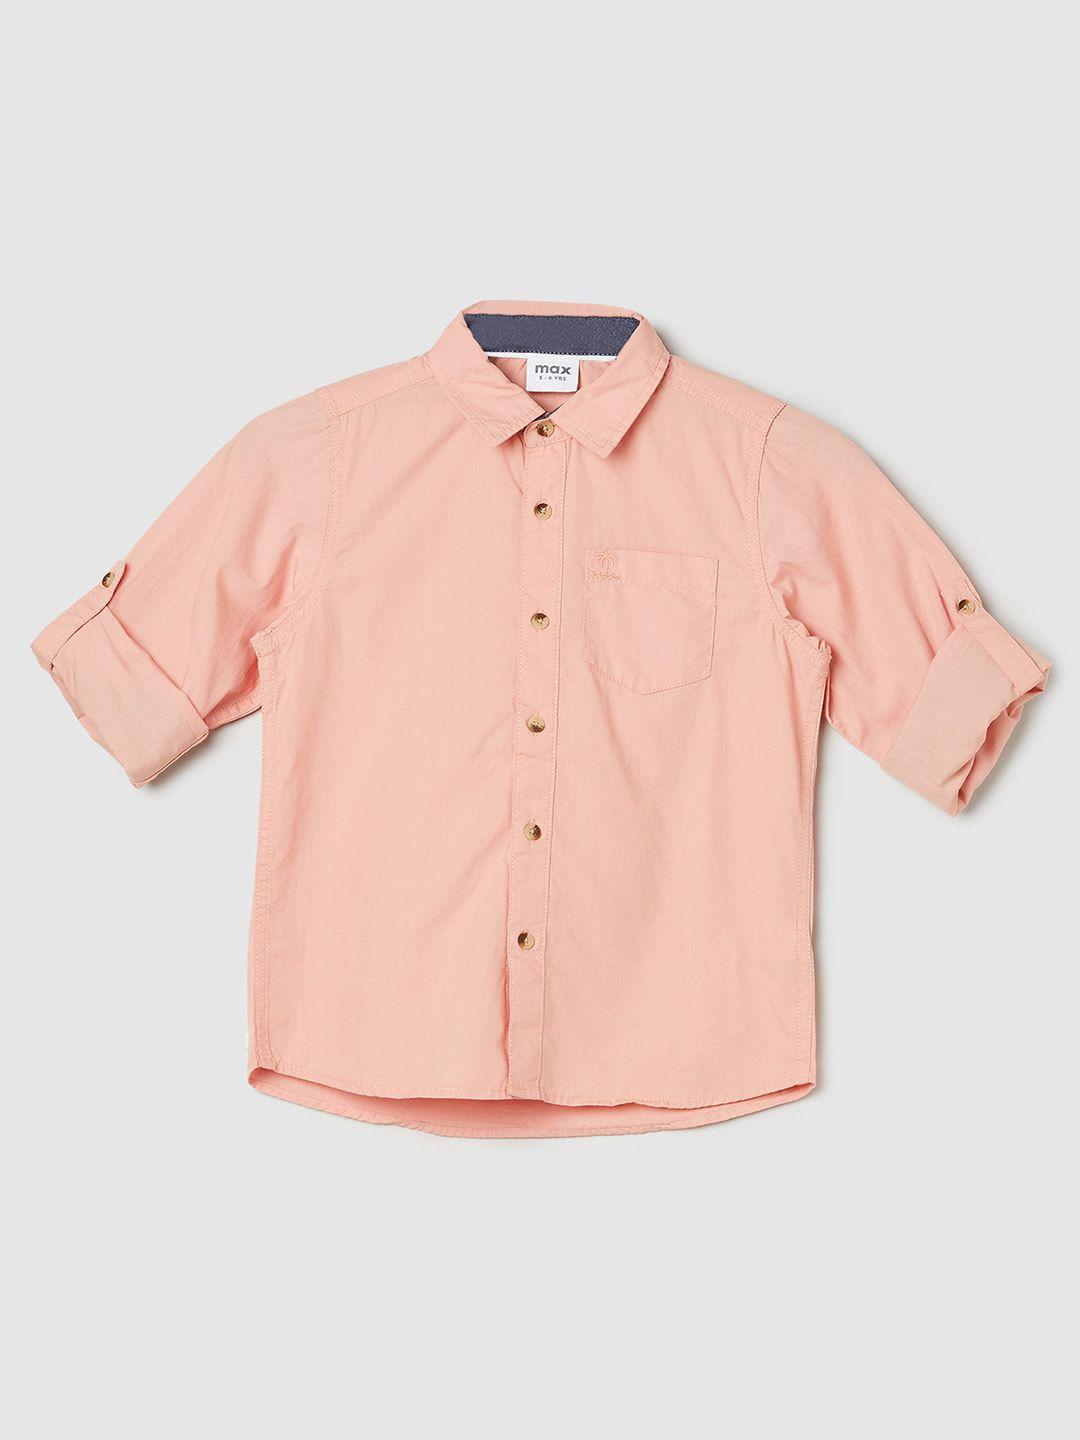 max-boys-orange-opaque-casual-shirt